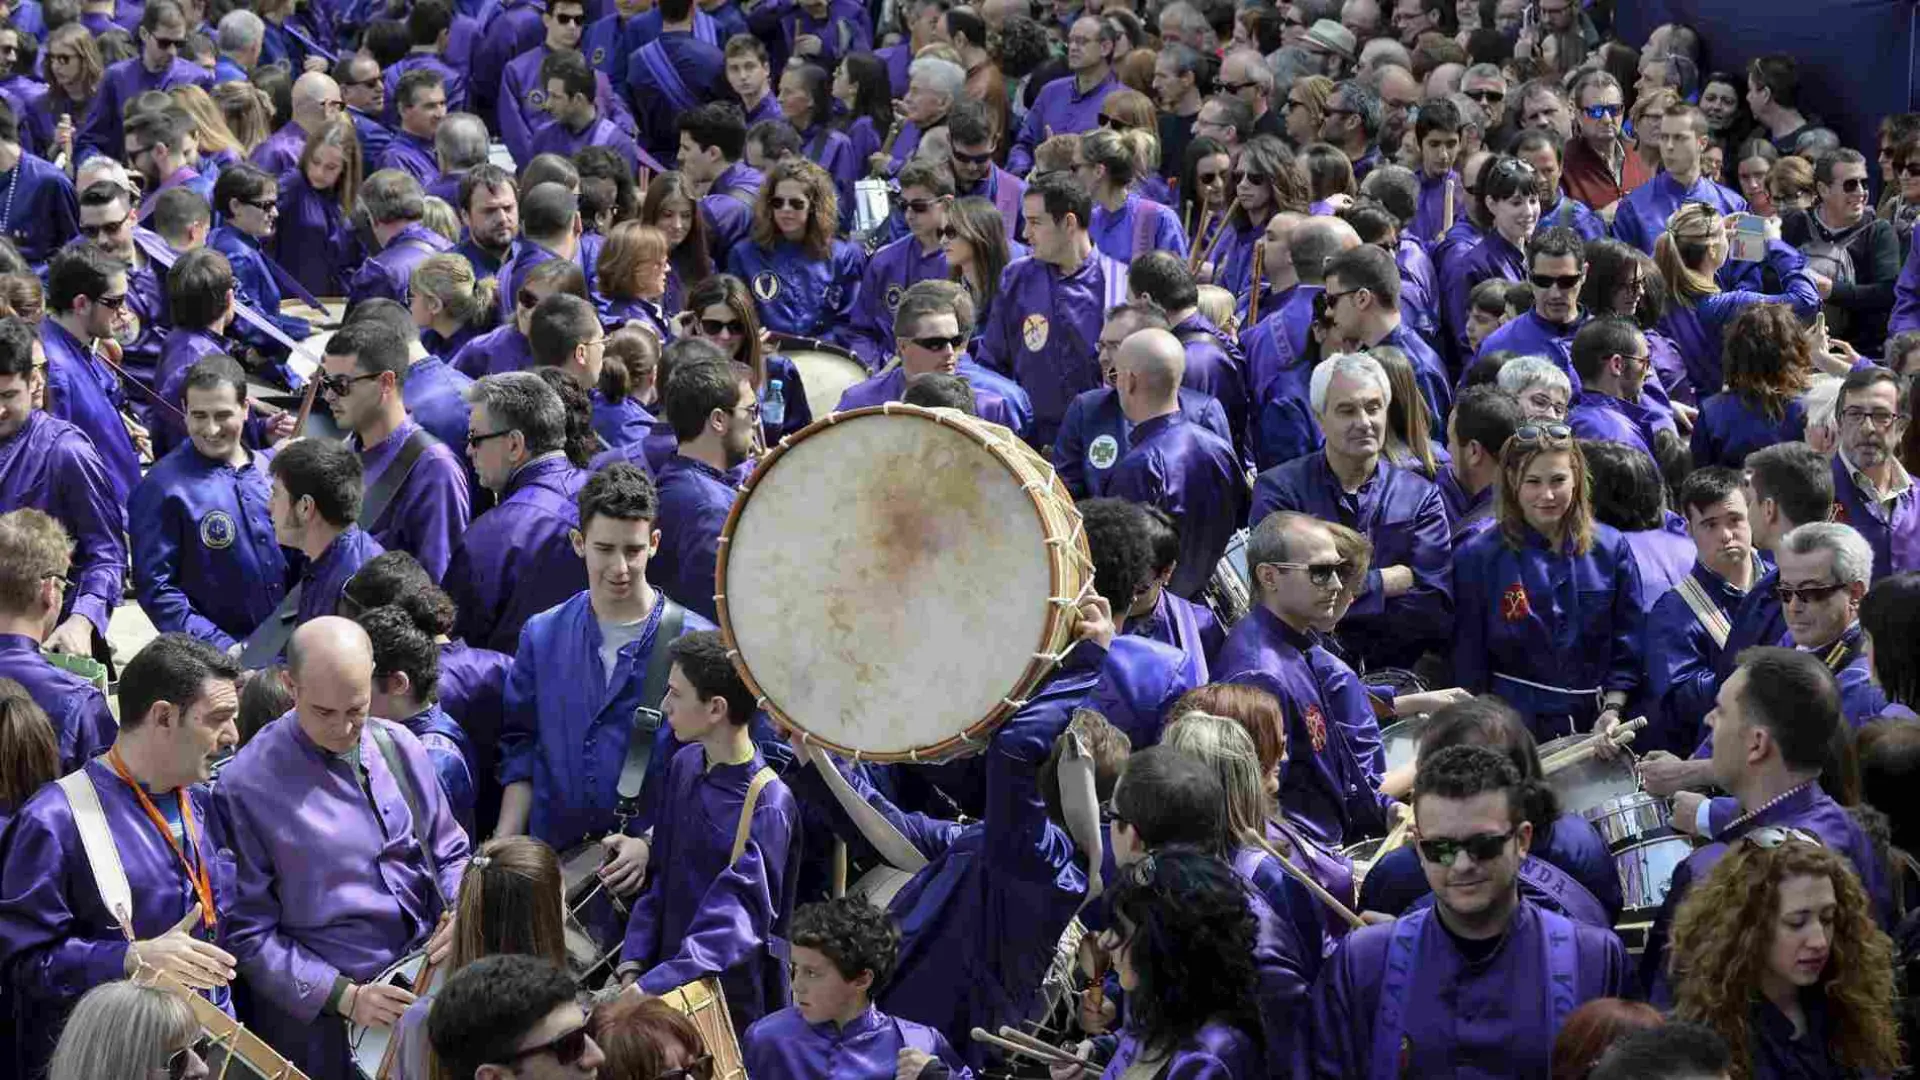 File:Tambores Semana Santa Huesca.jpg - Wikipedia